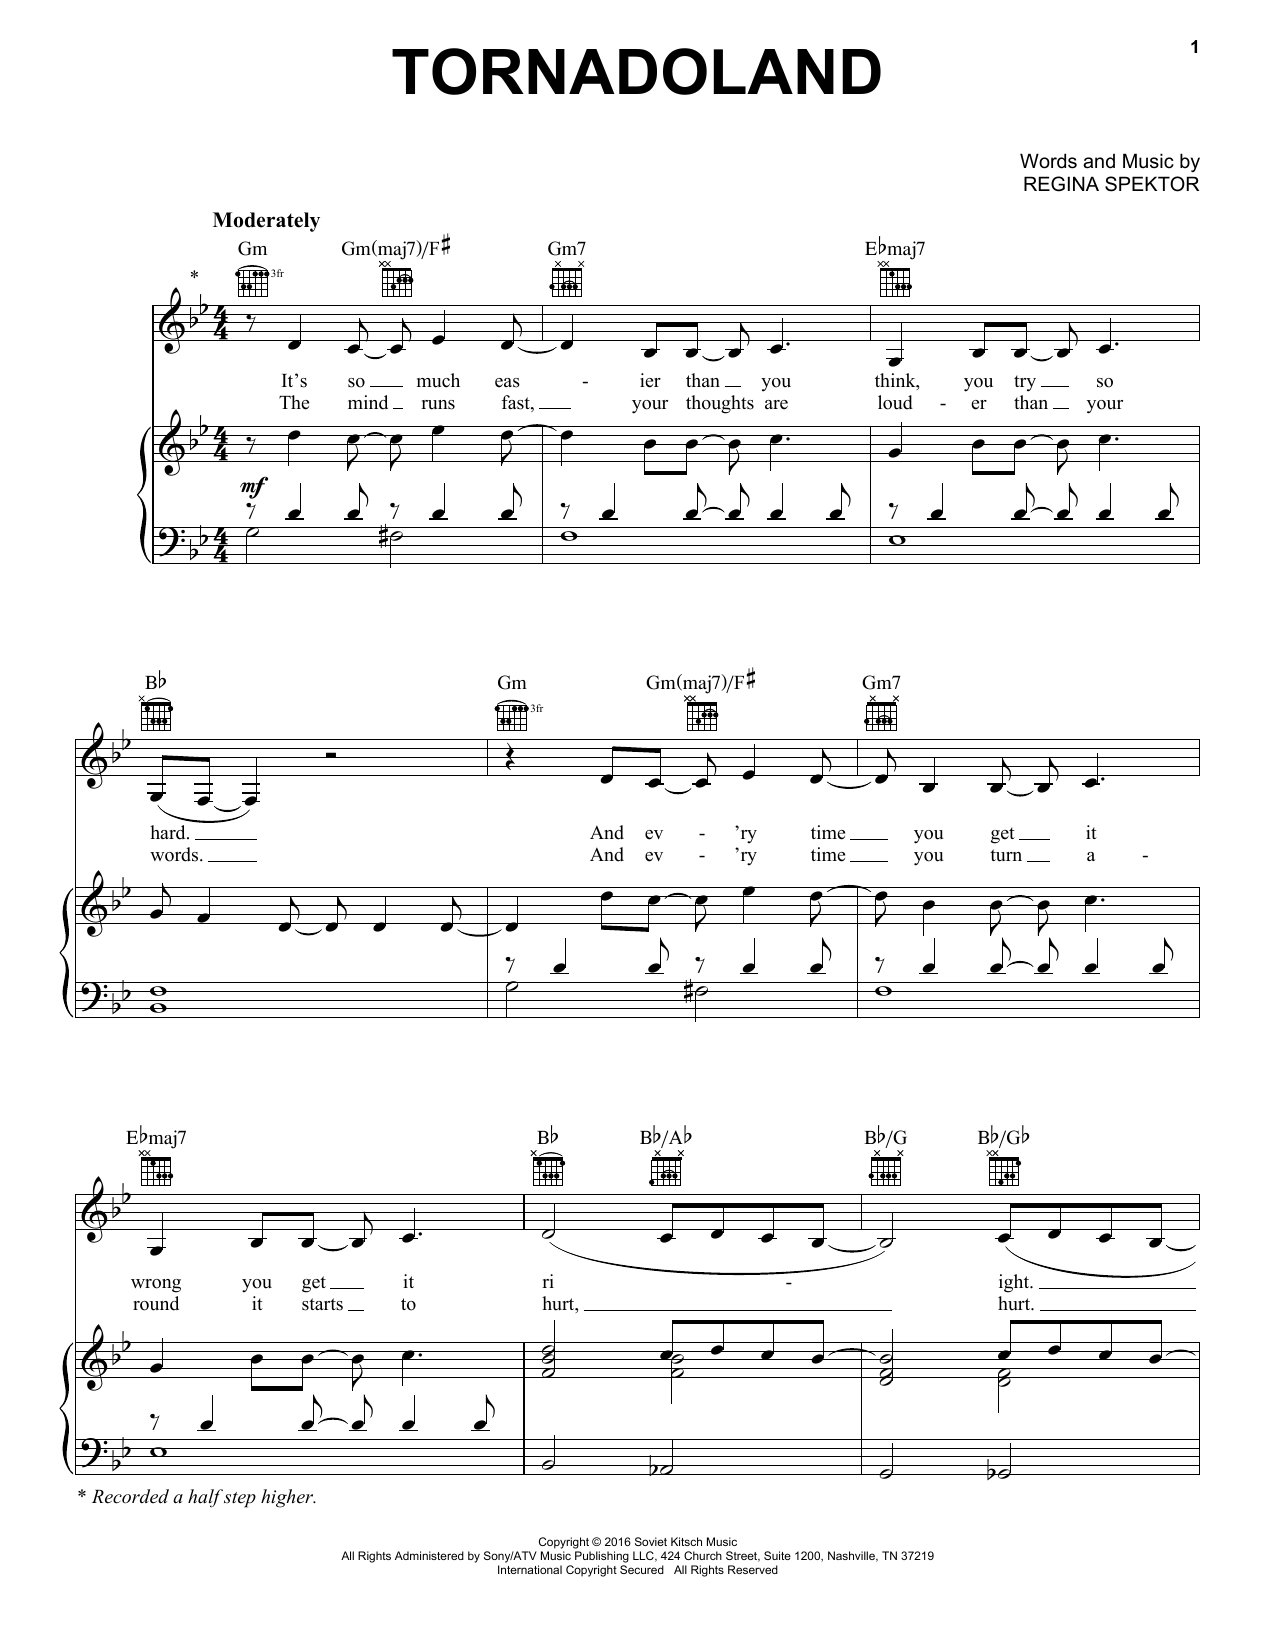 Regina Spektor Tornadoland Sheet Music Notes & Chords for Piano, Vocal & Guitar (Right-Hand Melody) - Download or Print PDF